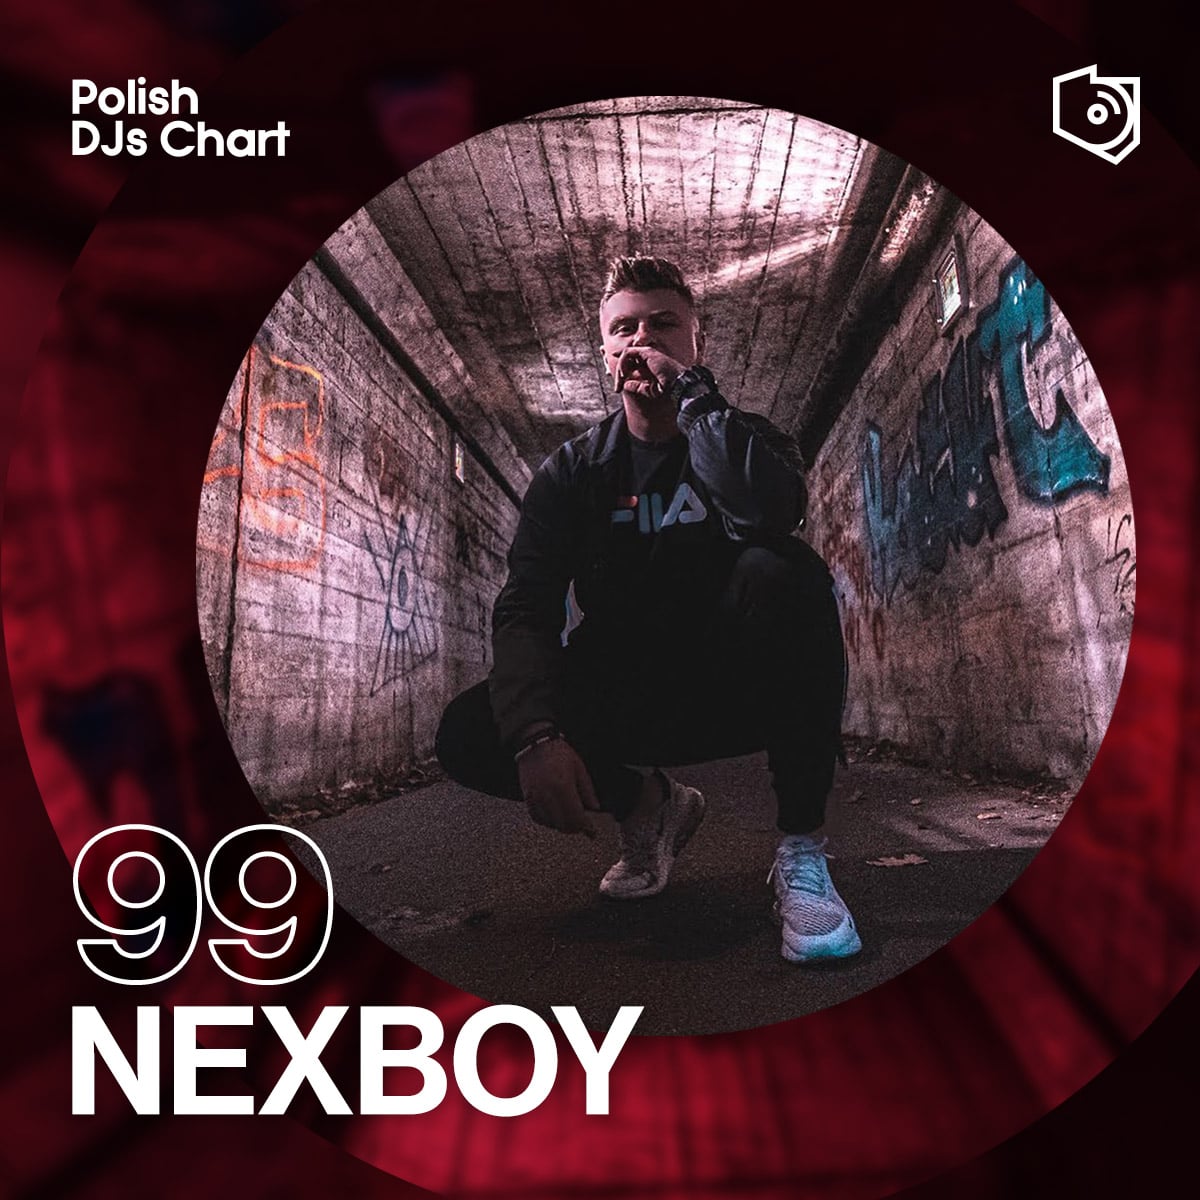 99. Nexboy